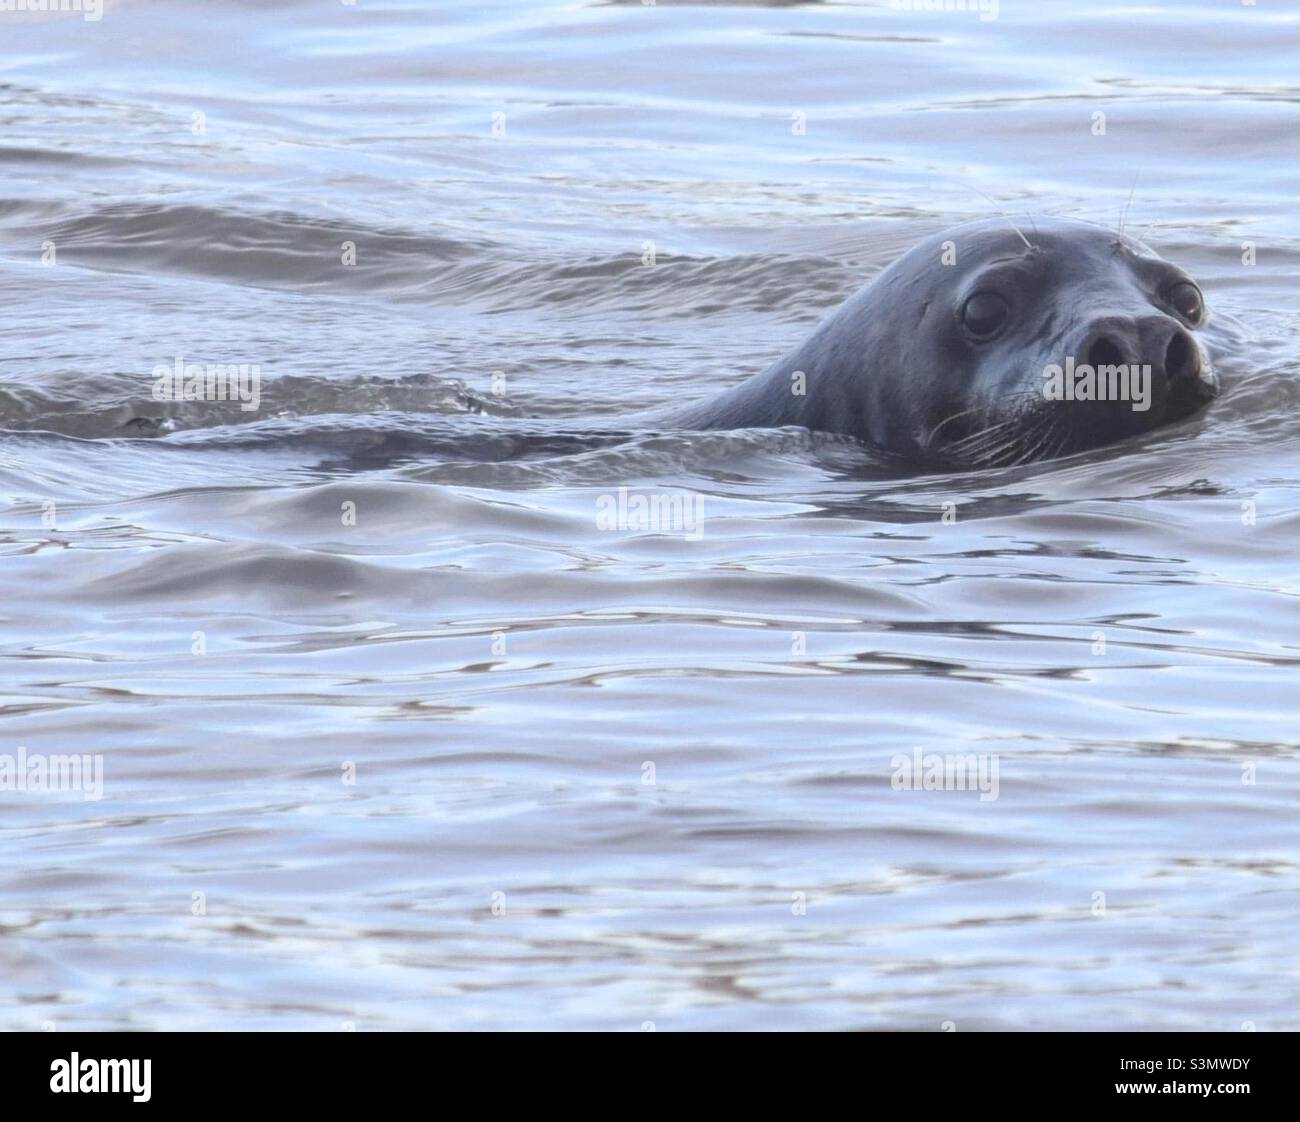 Seal swimming in the sea Stock Photo